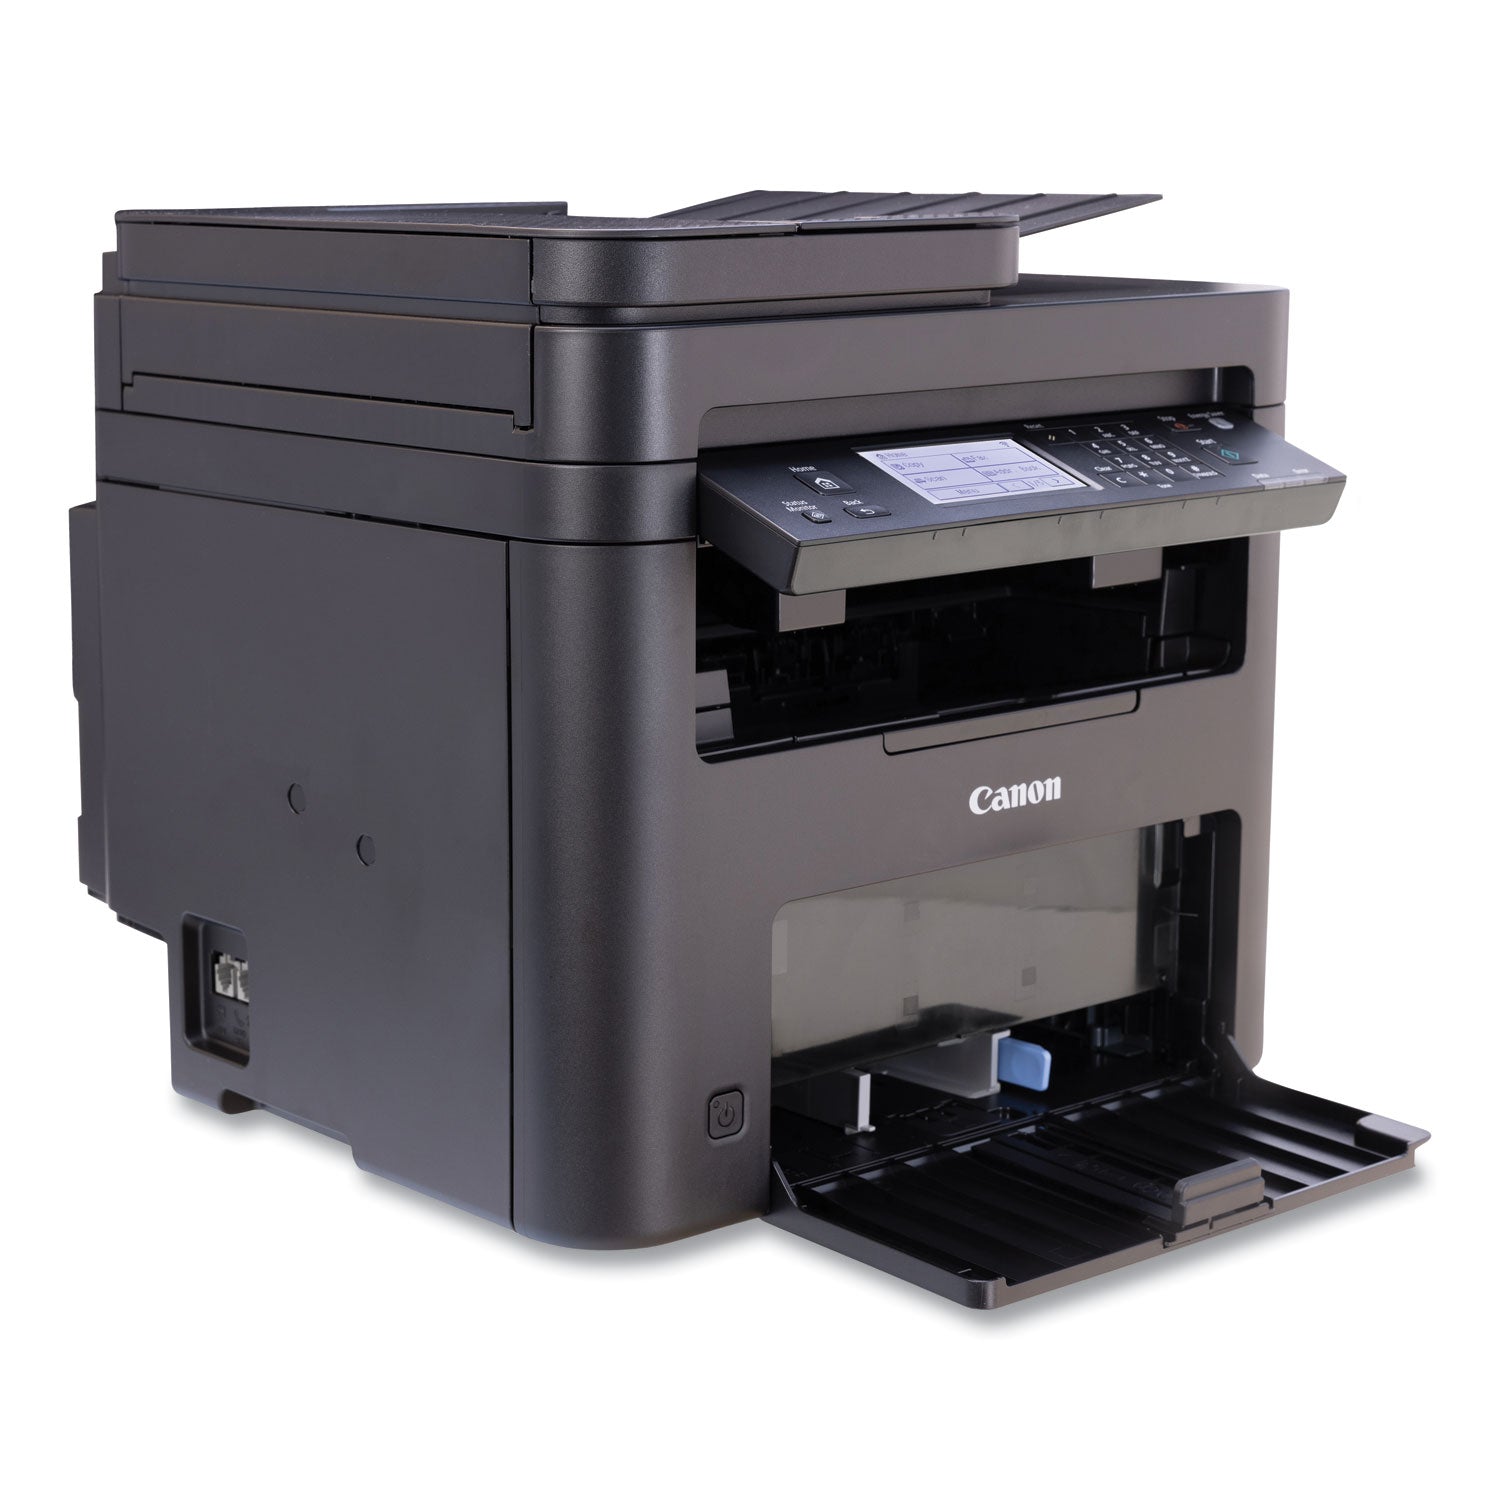 imageclass-mf275dw-wireless-multifunction-laser-printer-copy-fax-print-scan_cnm5621c004 - 2